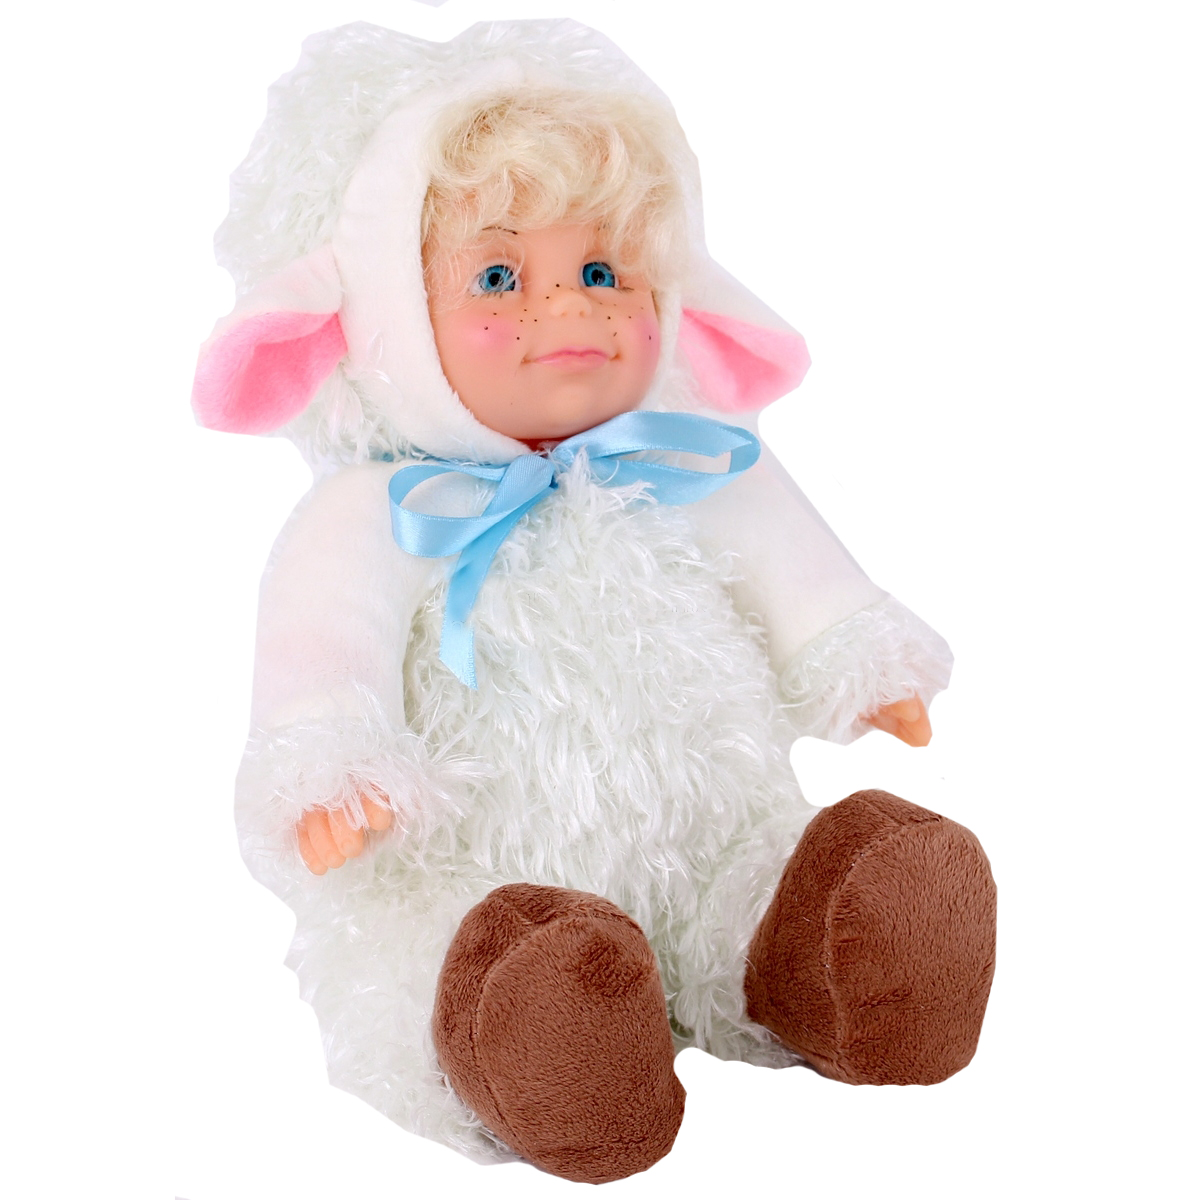 Kуклa мягкaя в кocтюмe oвeчки